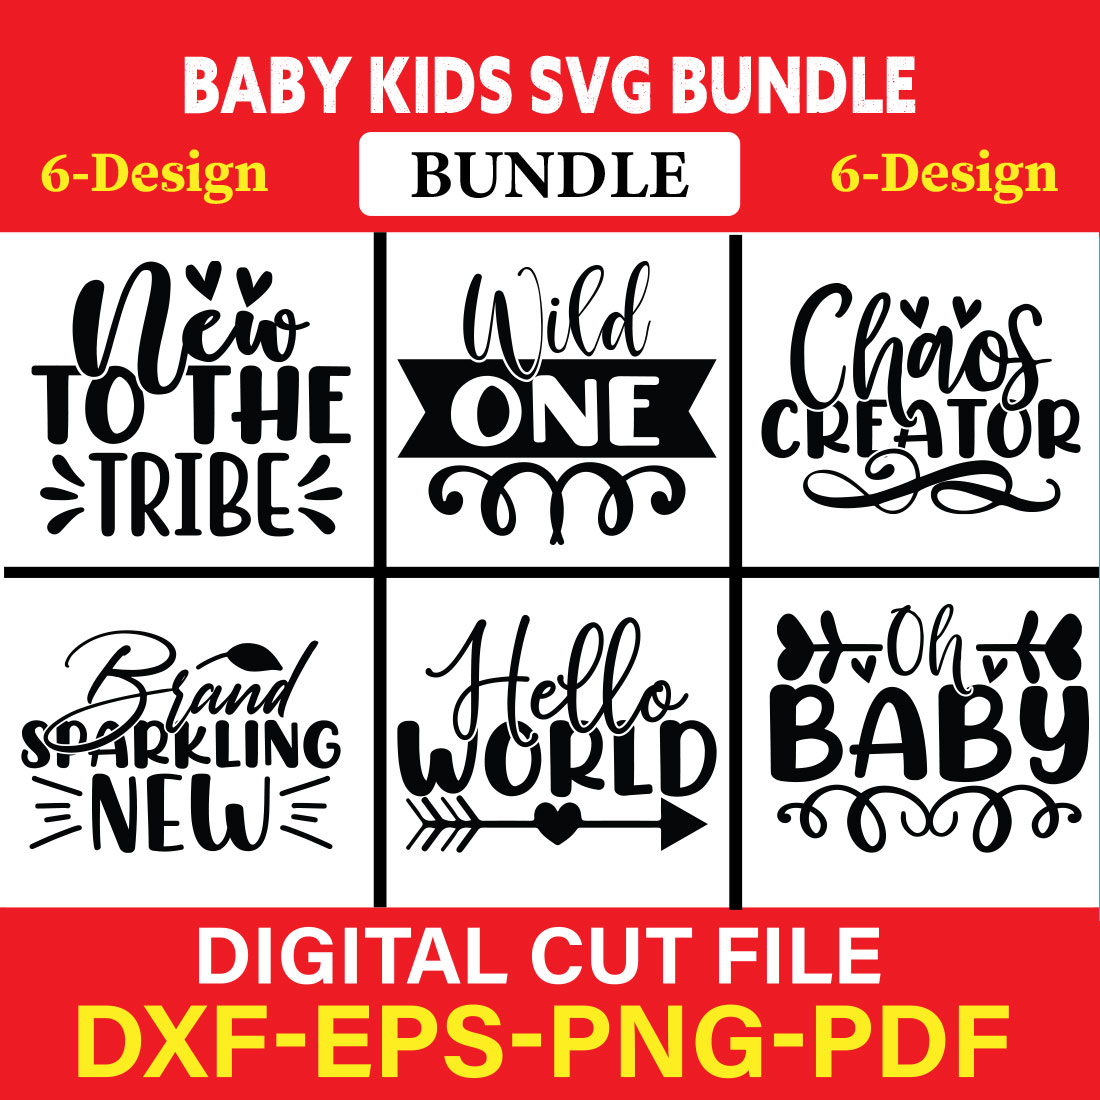 Baby Kids T-shirt Design Bundle Vol-5 cover image.